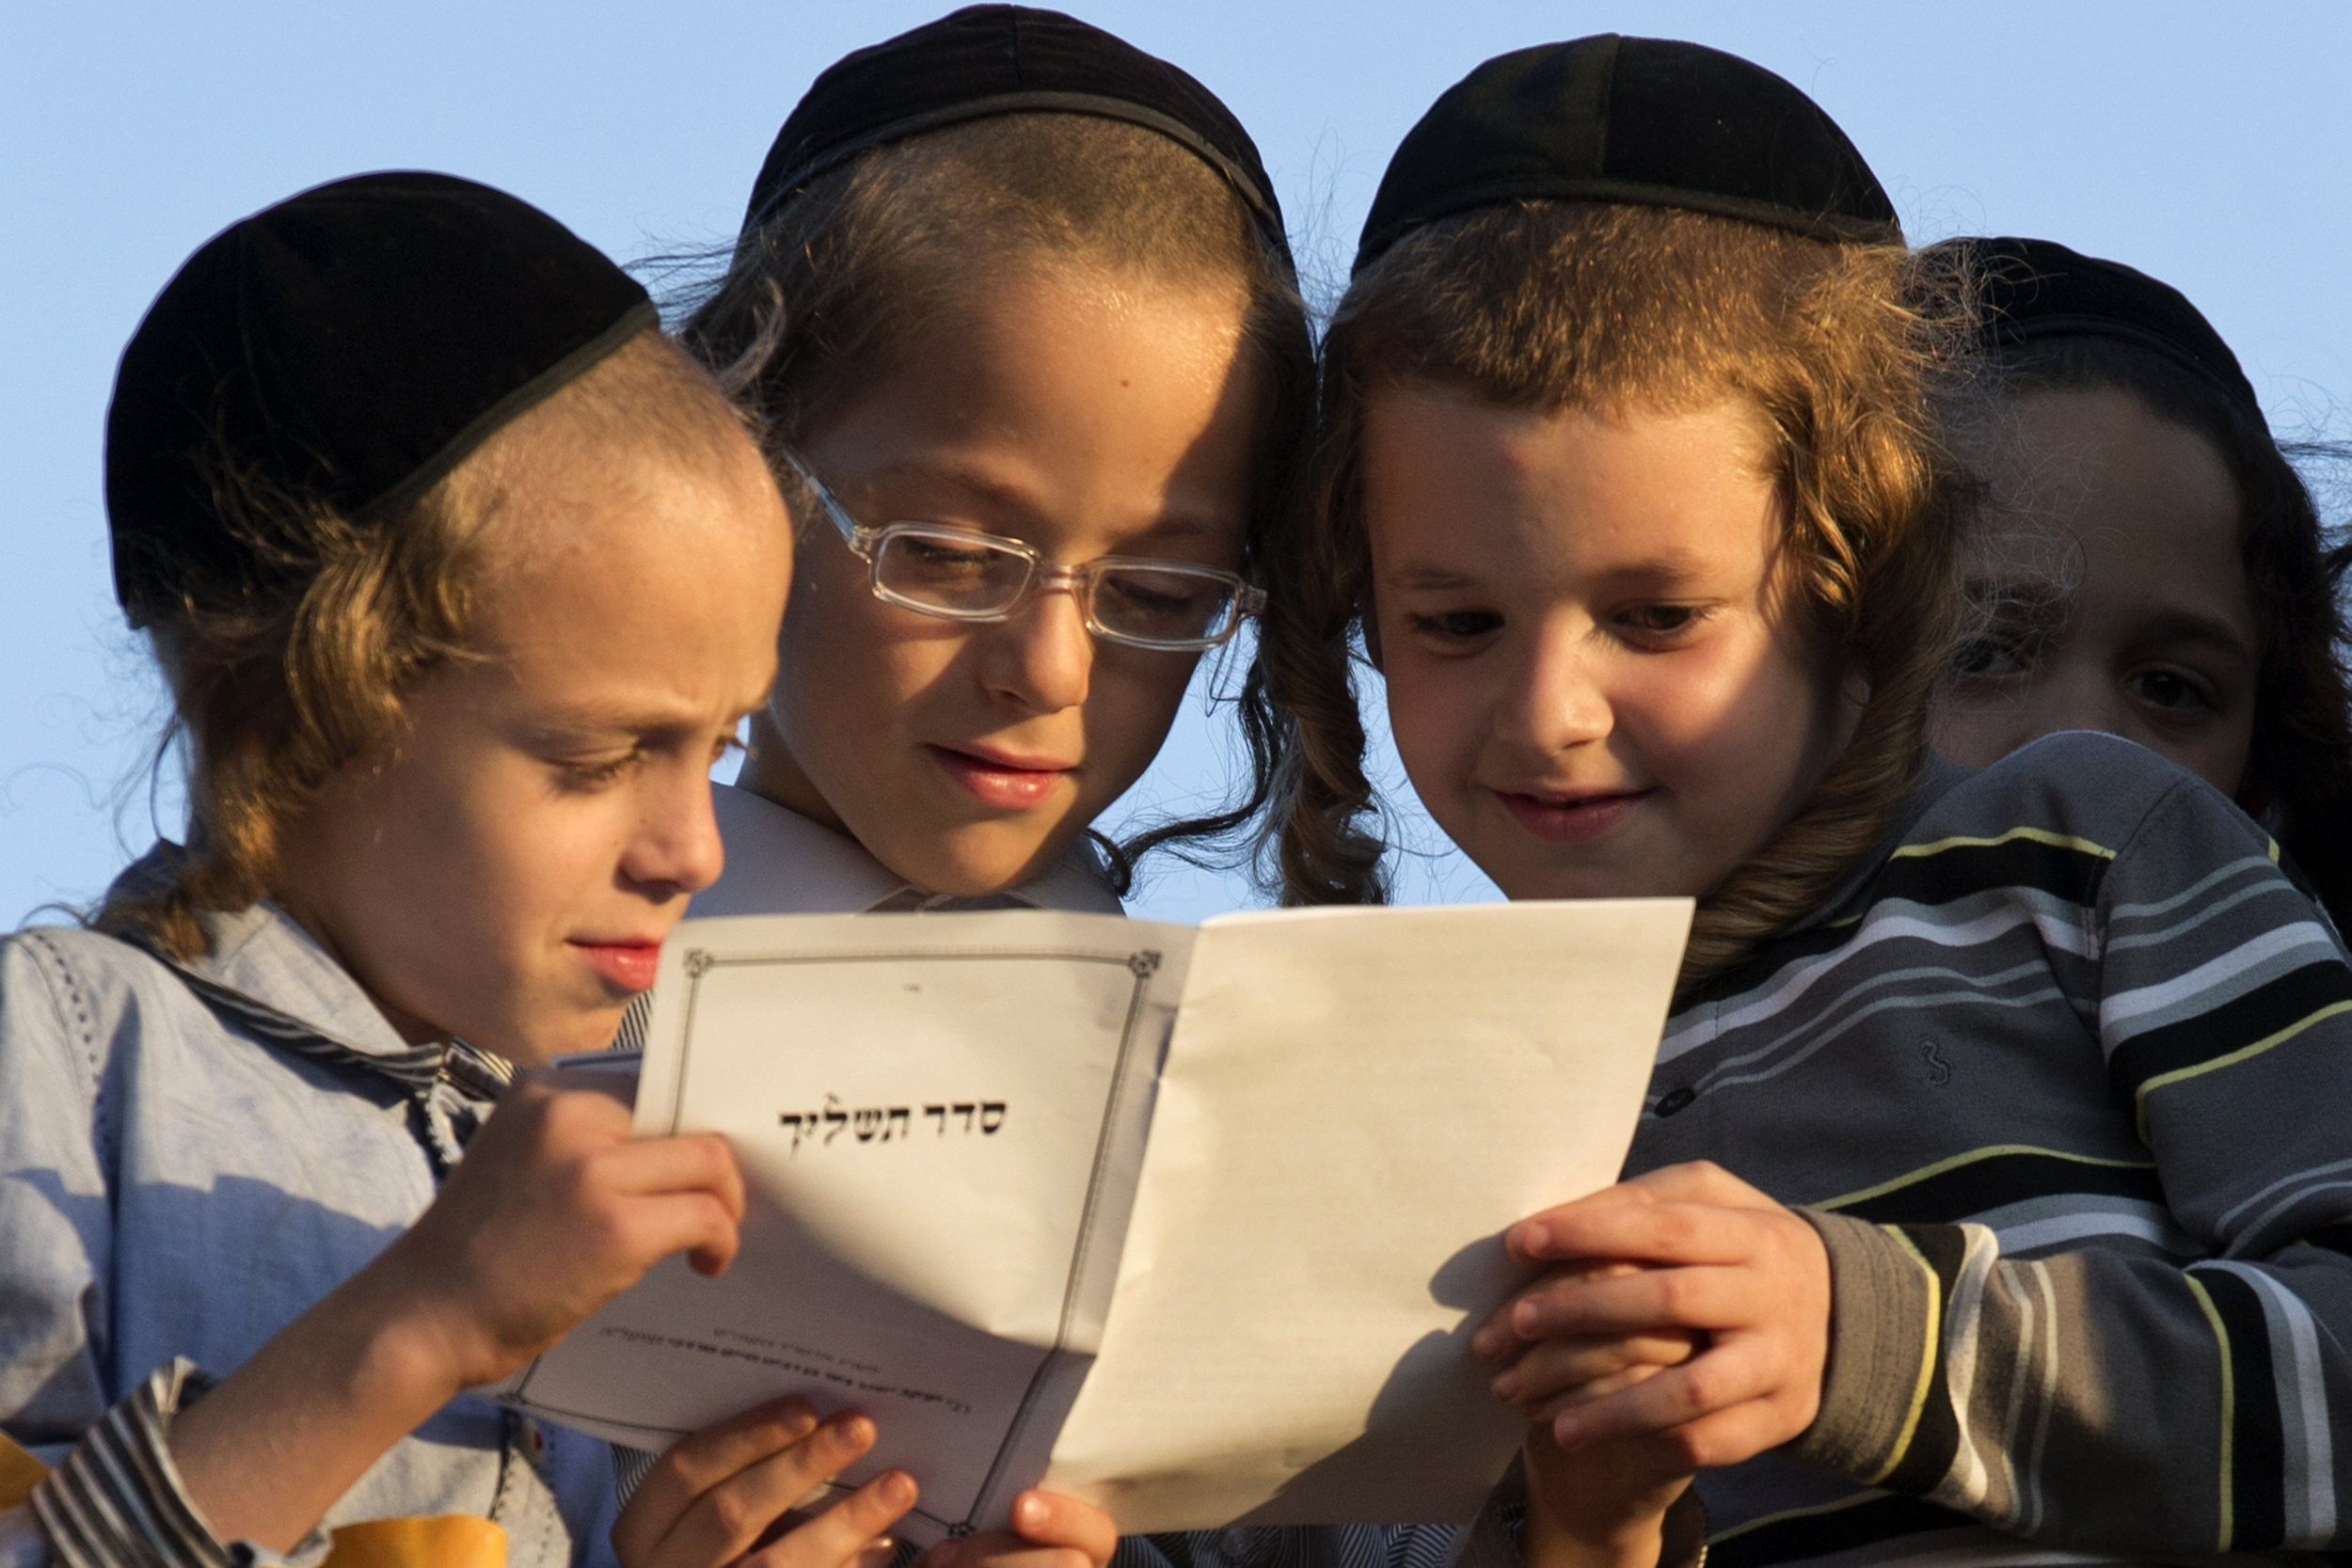 yom kippur, day of atonement, high holiday prayer book, kids